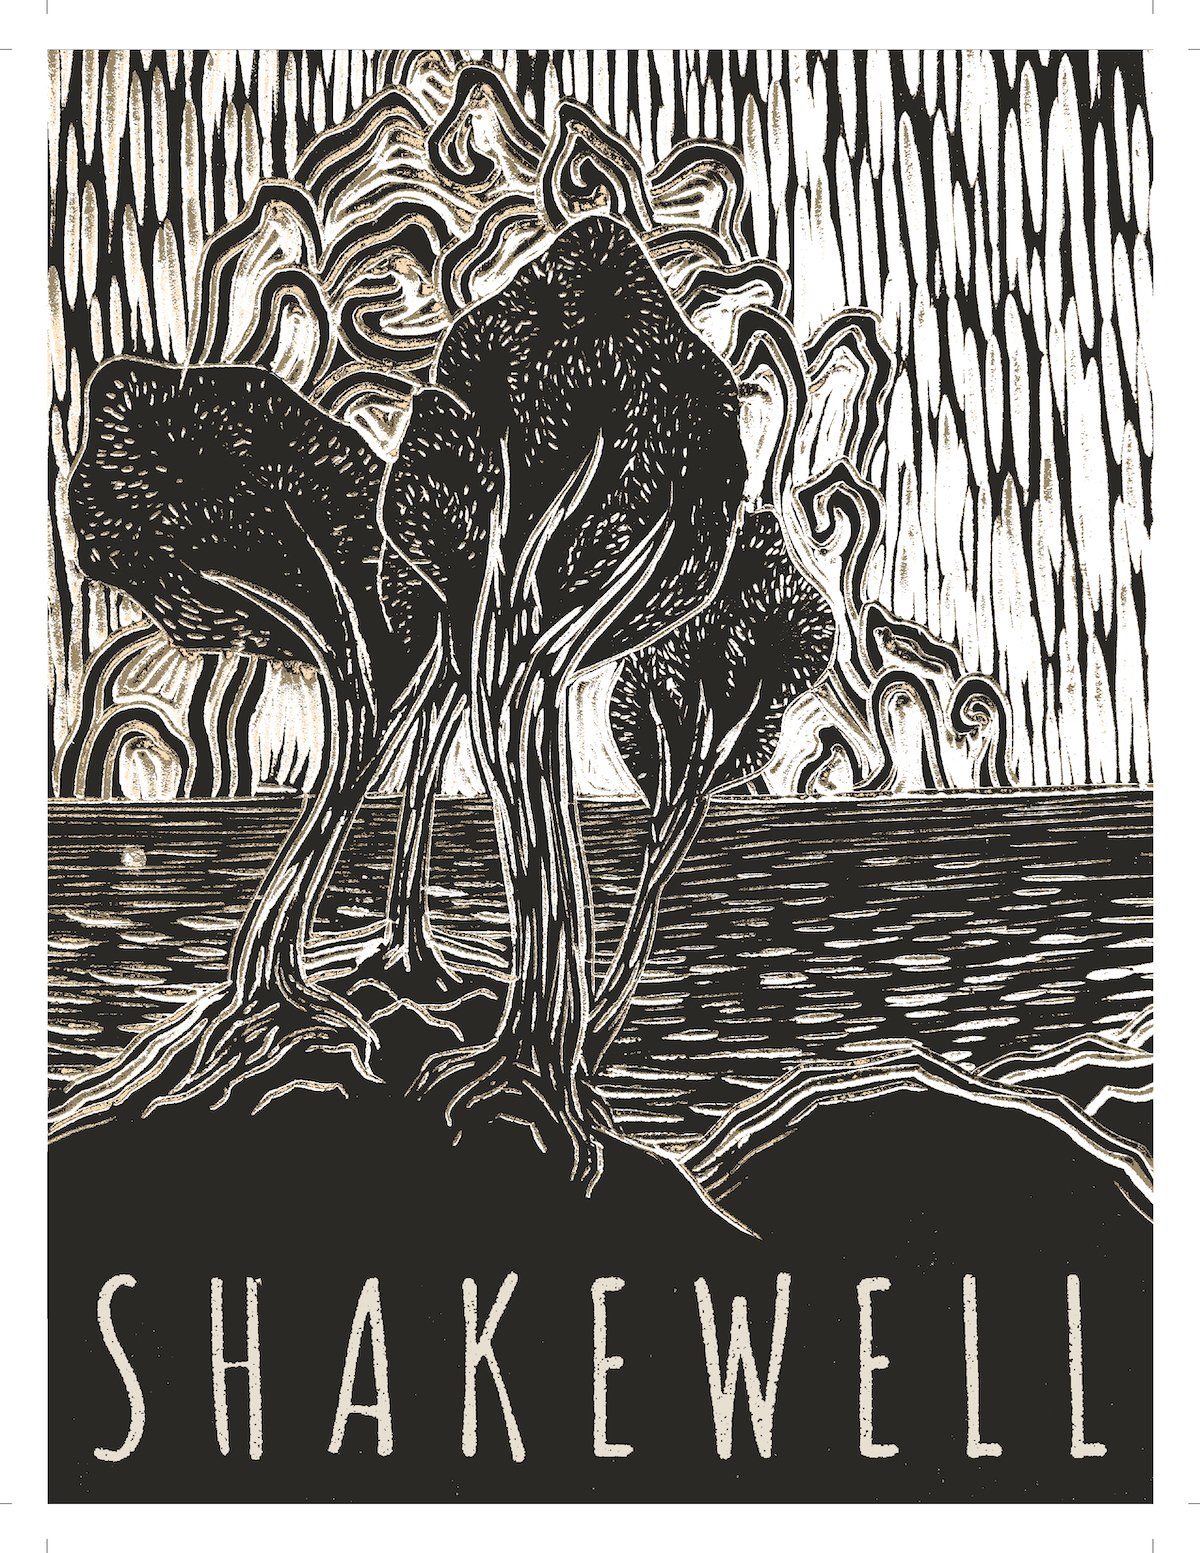 Shakewell - Oakland's Favorite Mediterranean Restaurant & Bar